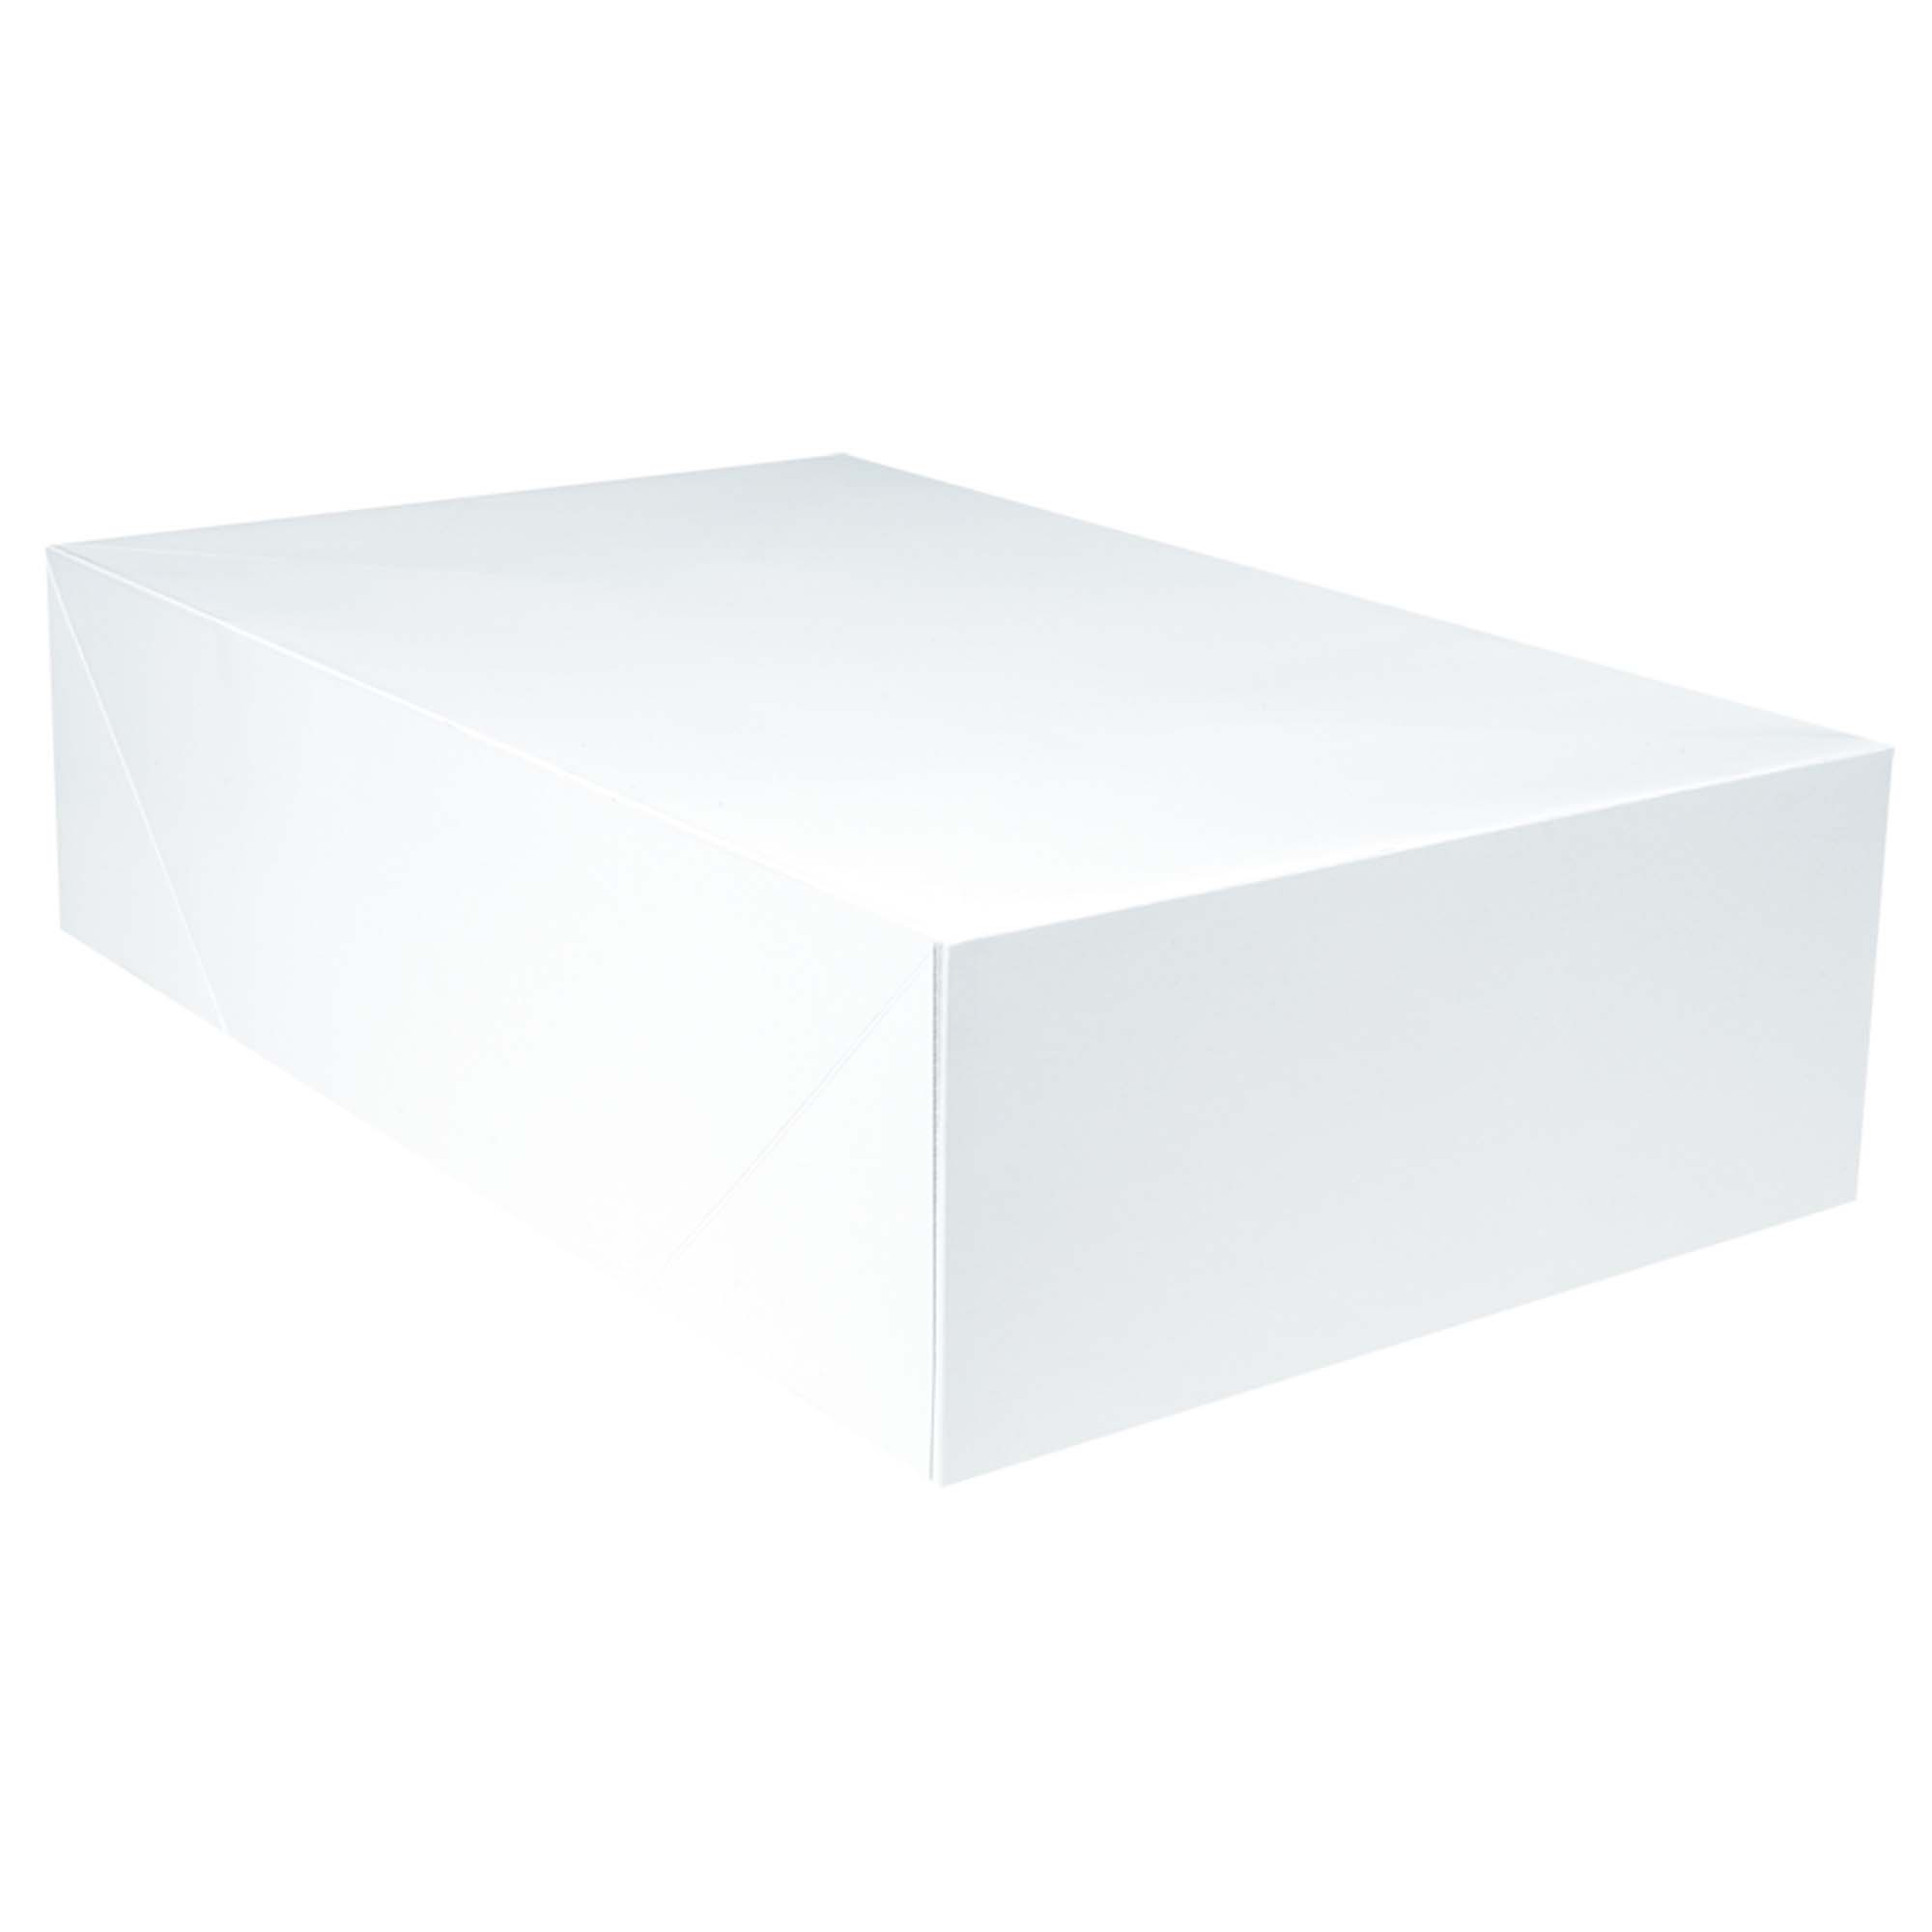 White Gift Box 19 x 12in